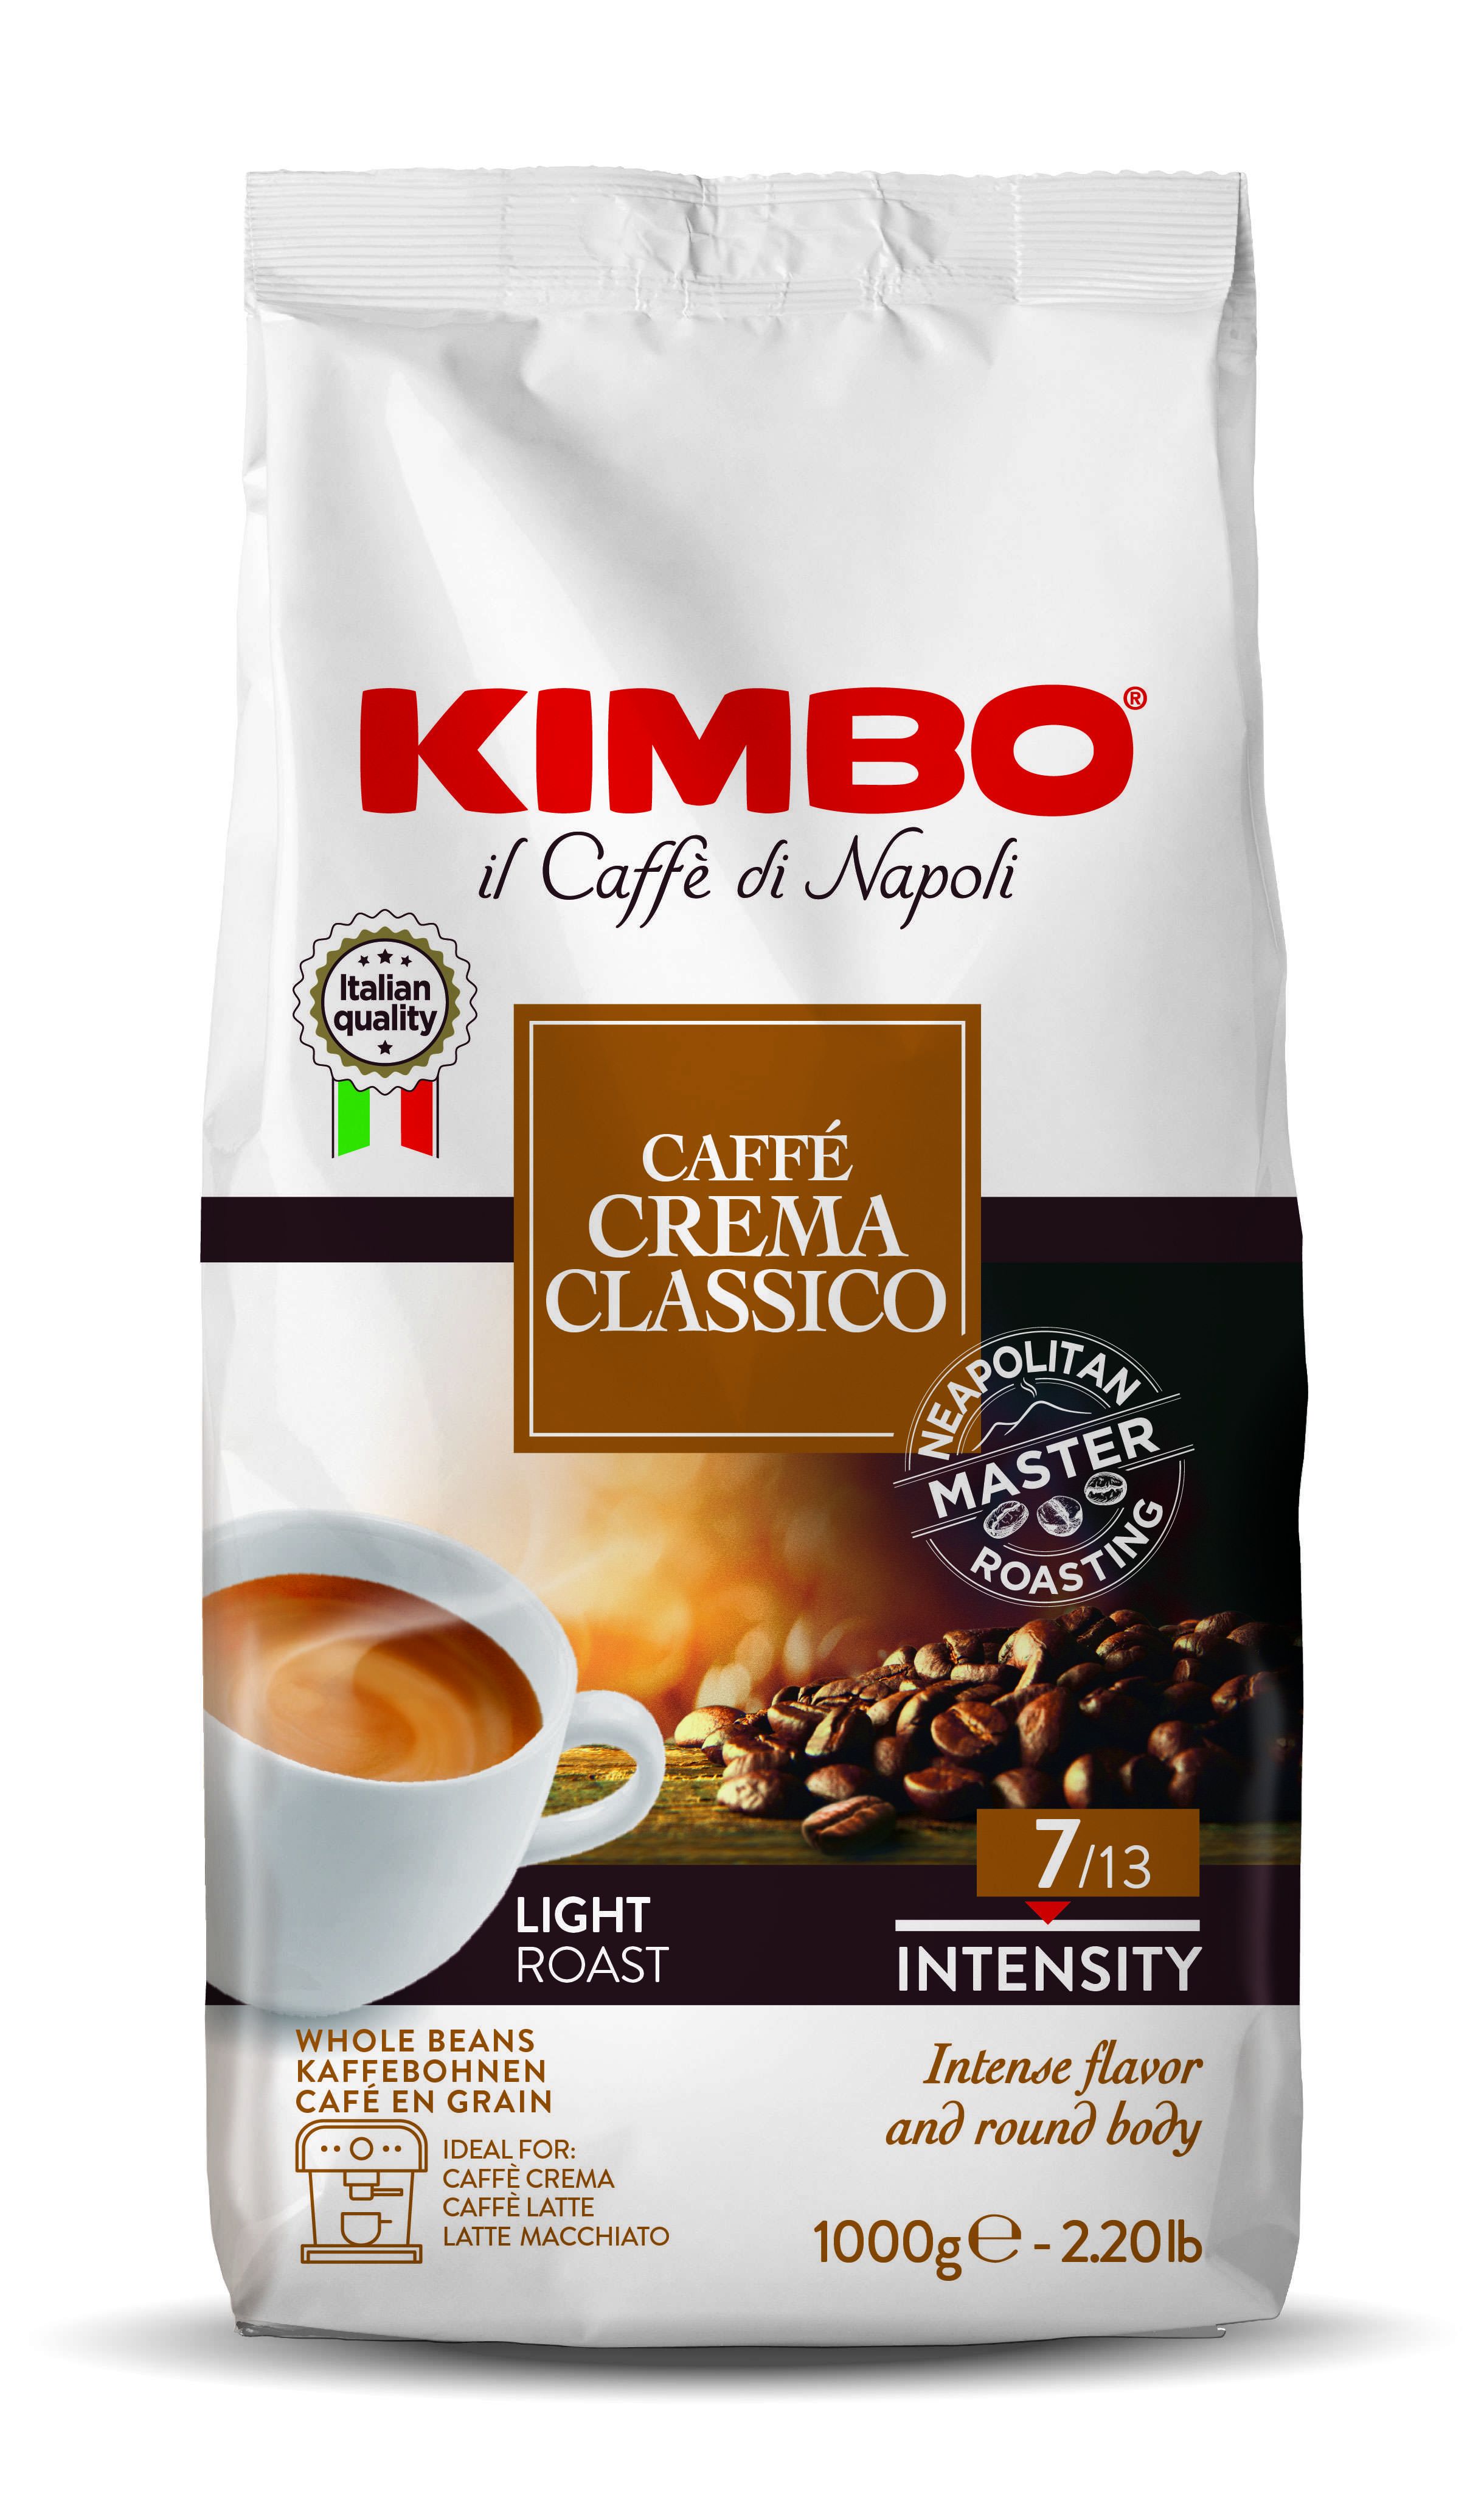 CaffeCrema Classico ganze Kaffeebohnen 1kg